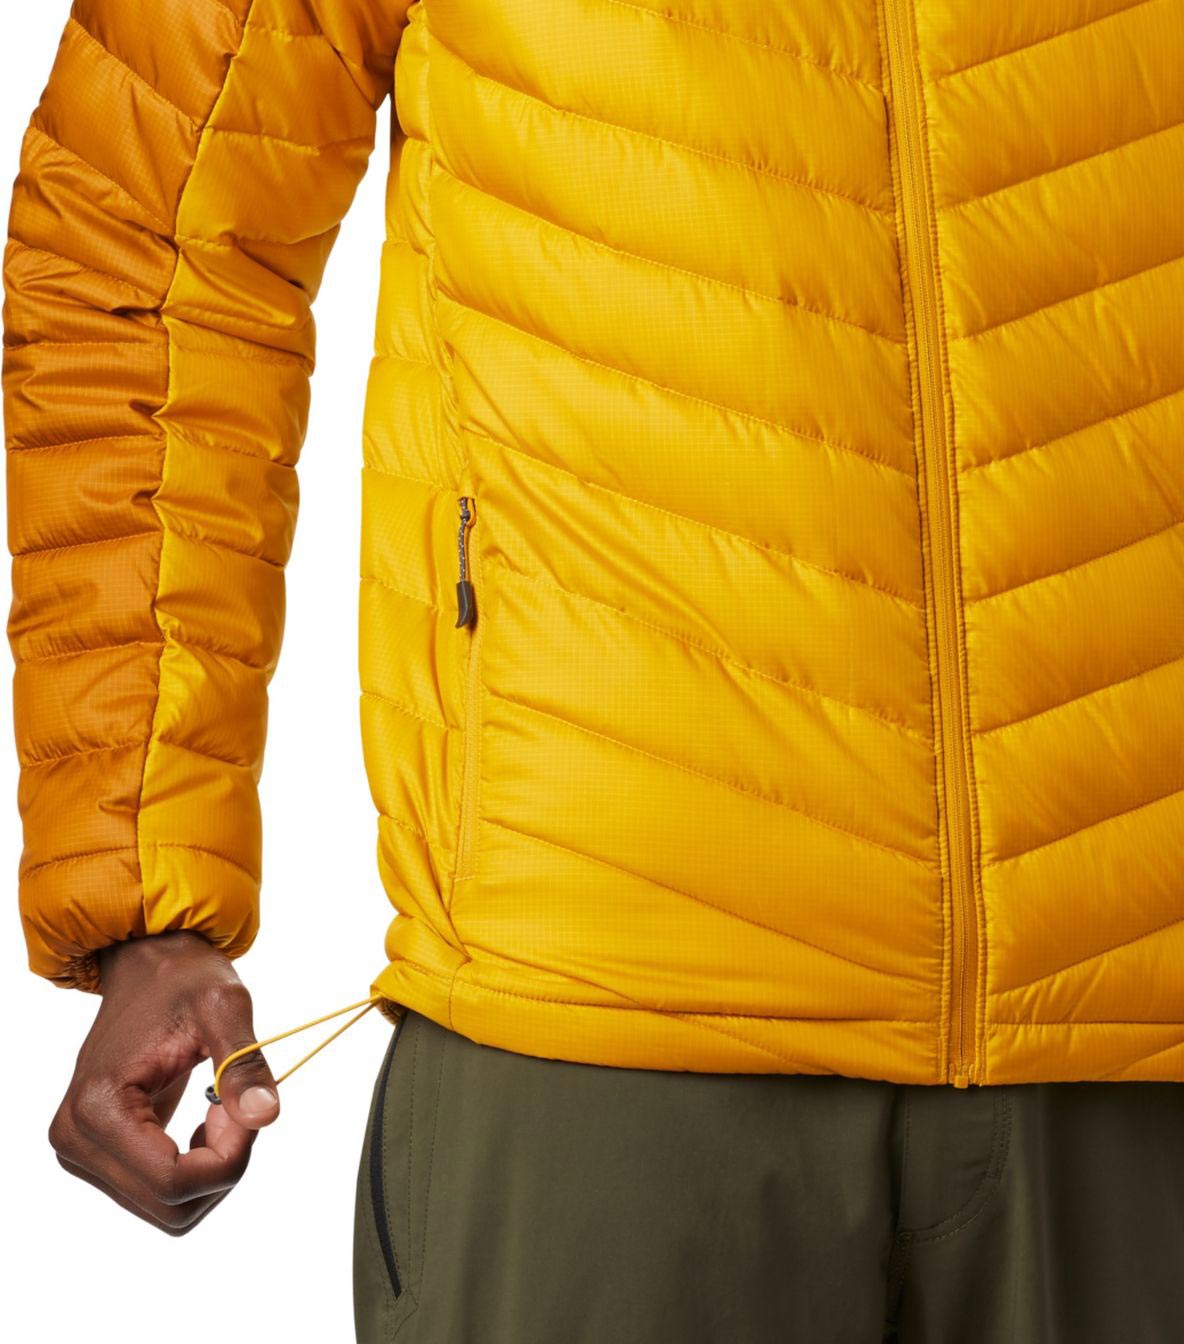 Men's insulated jacket